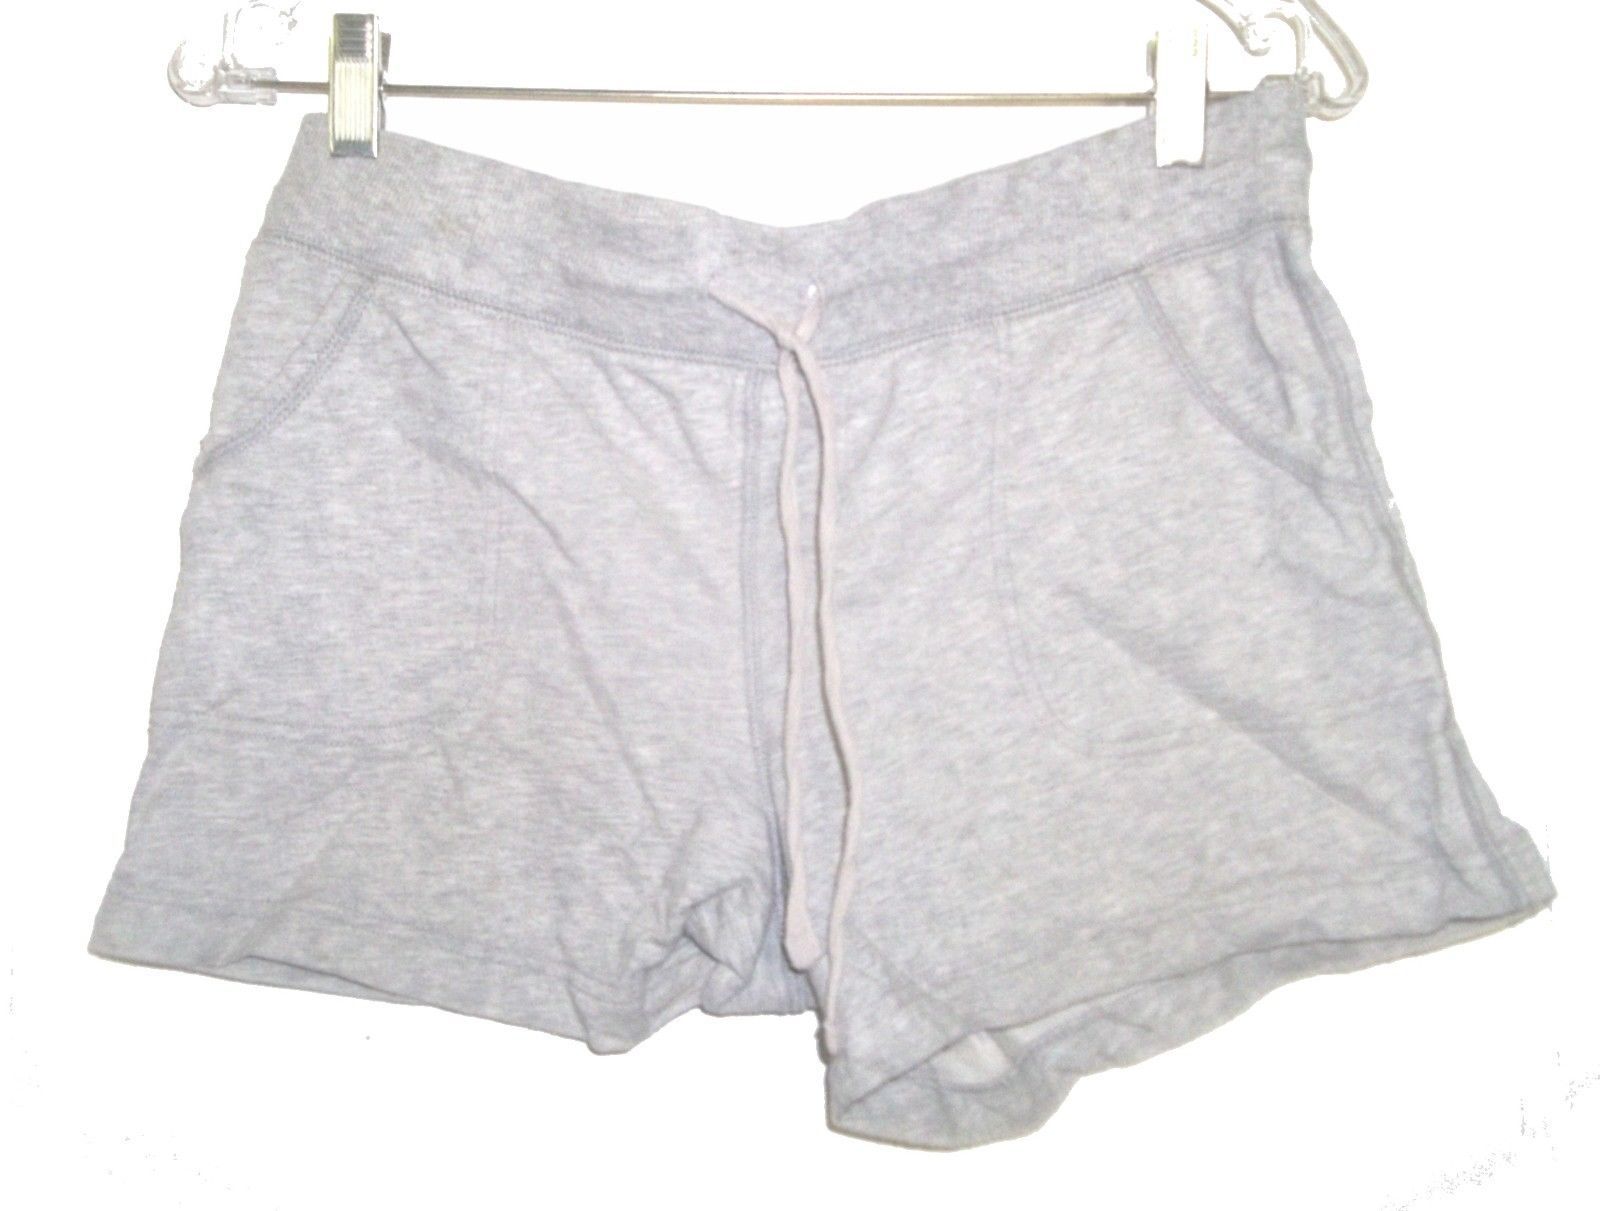 Size S (4-6) - Faded Glory Light Gray Ash 100% Cotton Shorts w/Drawstring Waist - $14.24